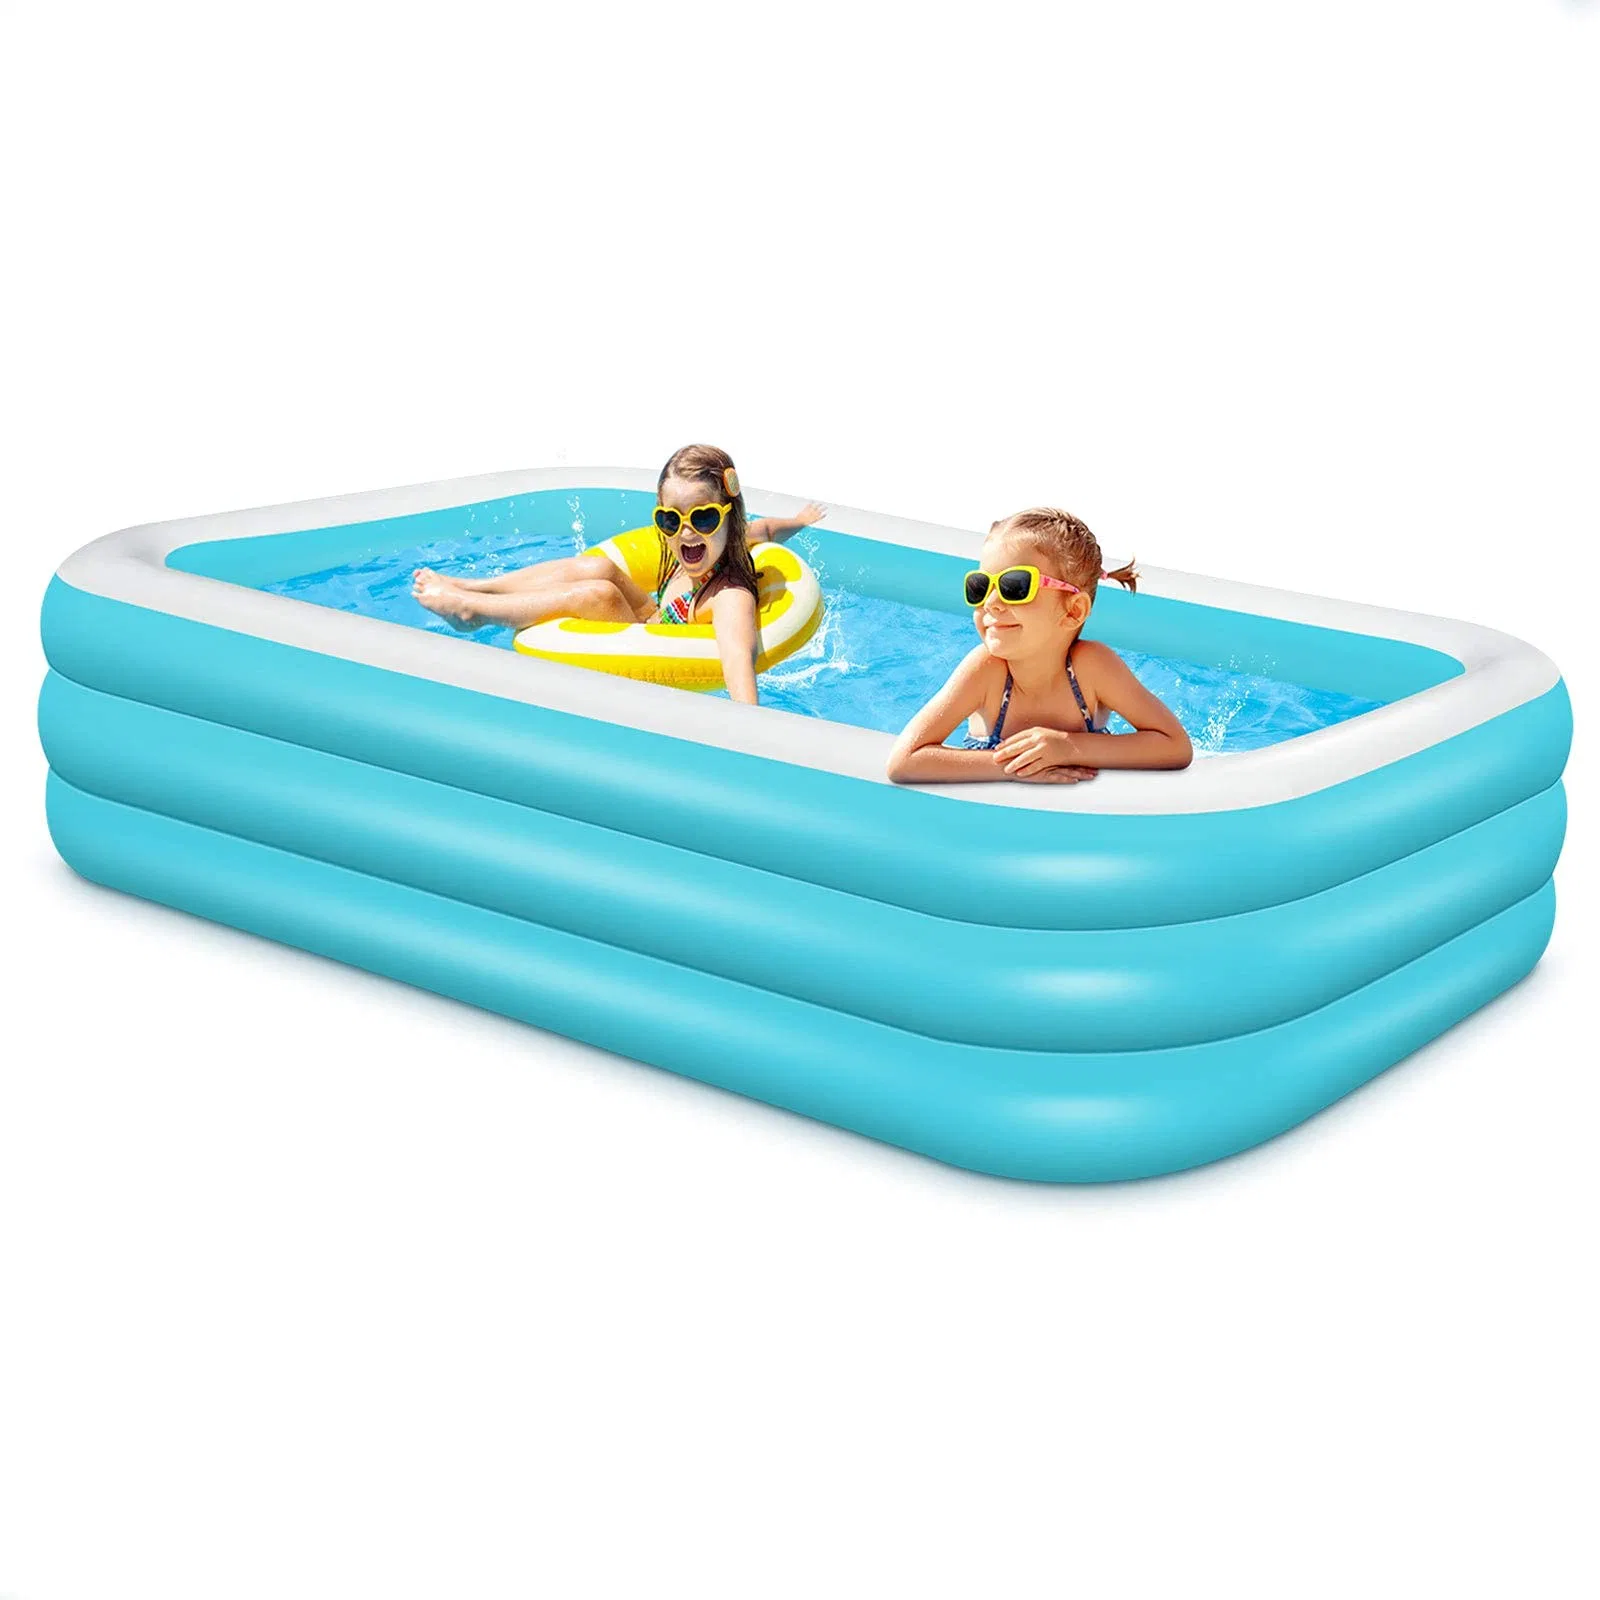 Easy to Assamble Rectangular Inflatable Pool for Children